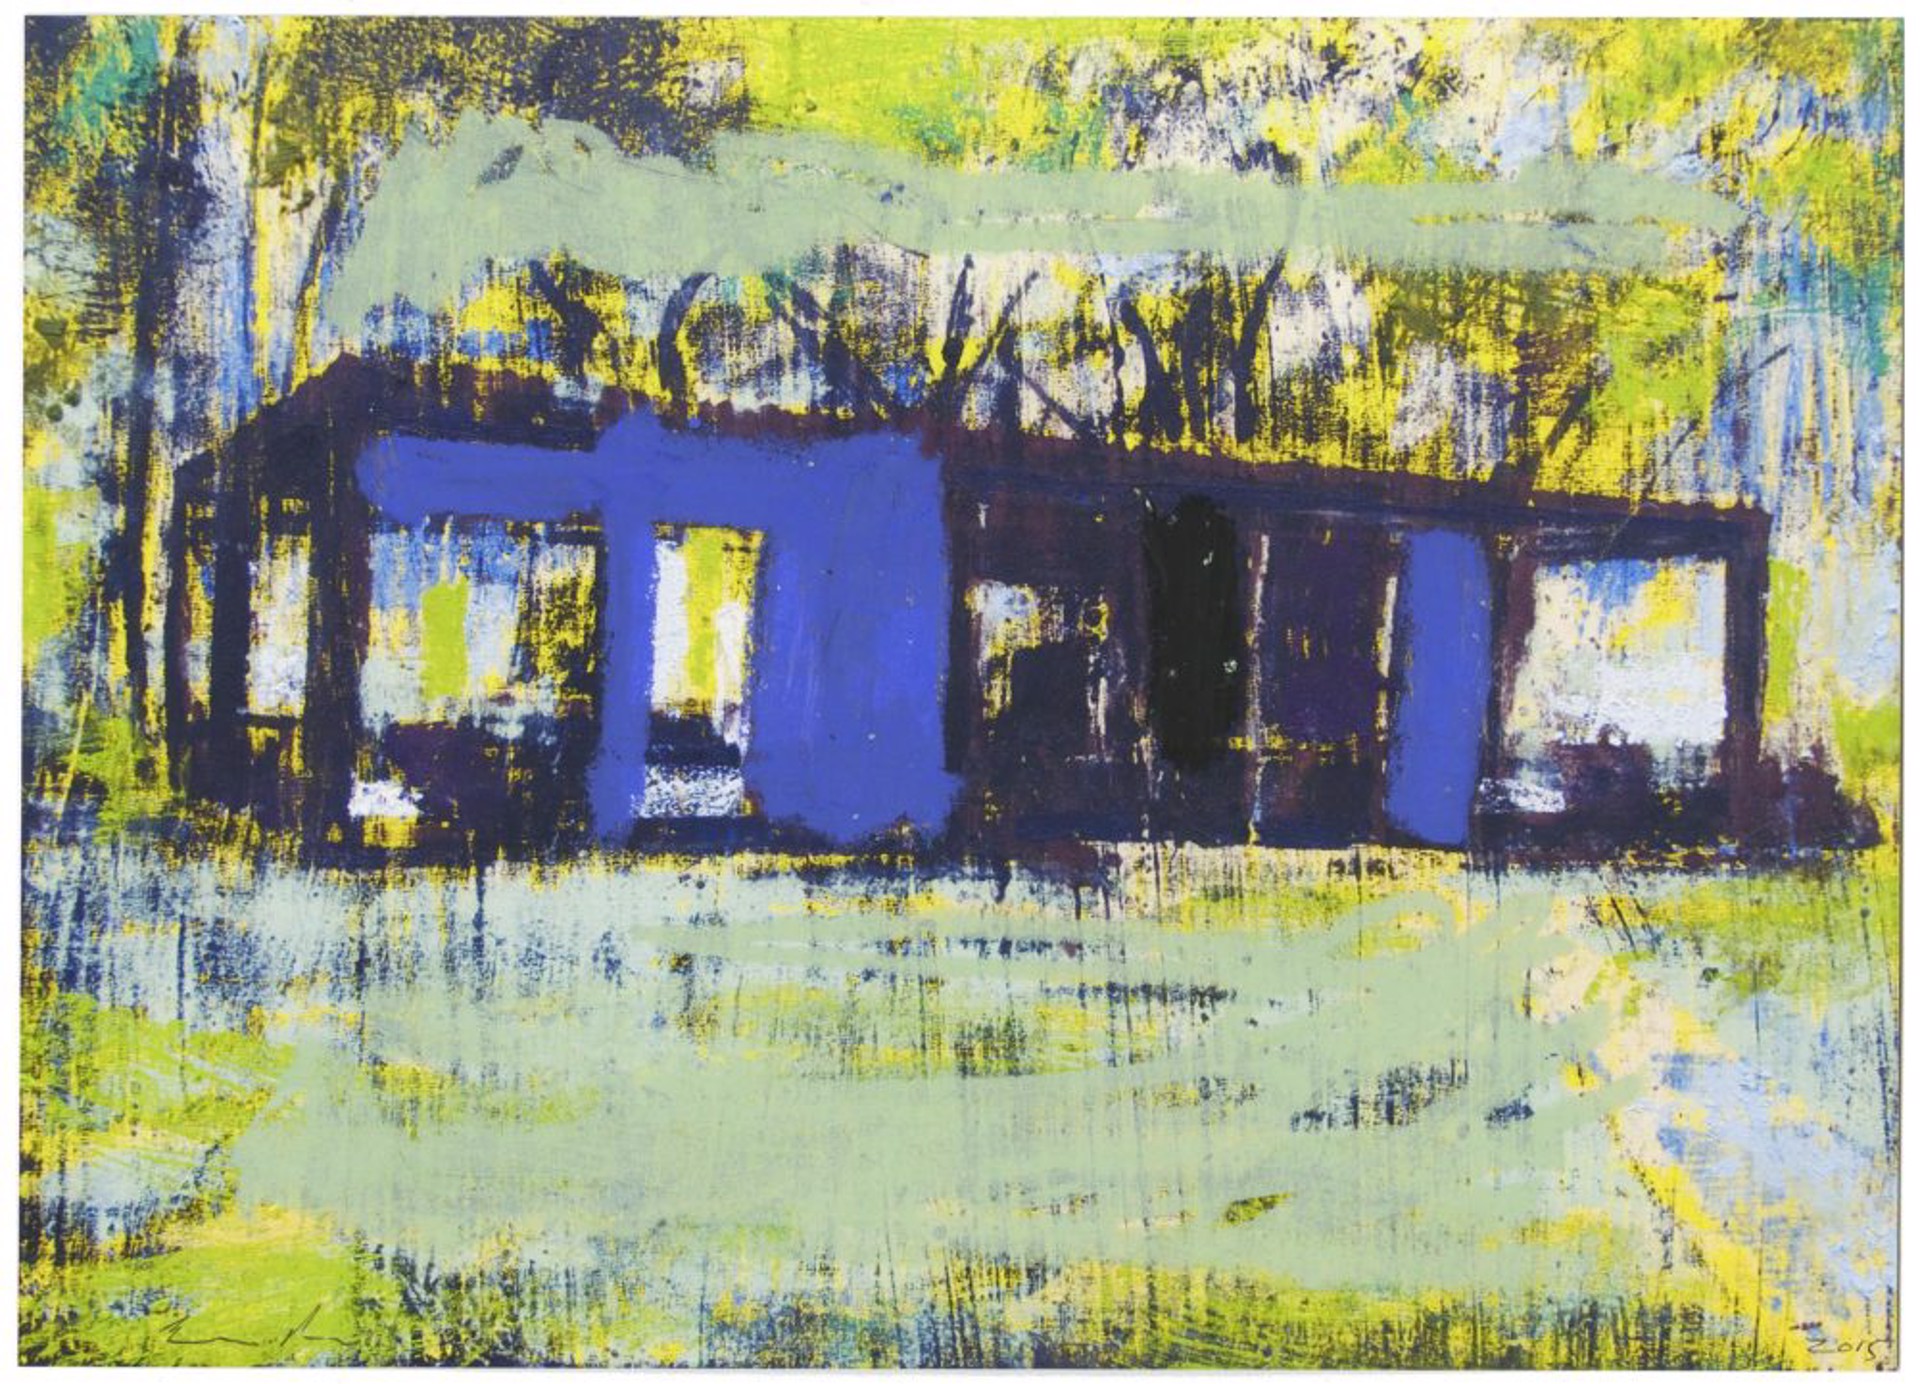 Glass House II (Yellow) by Enoc Perez